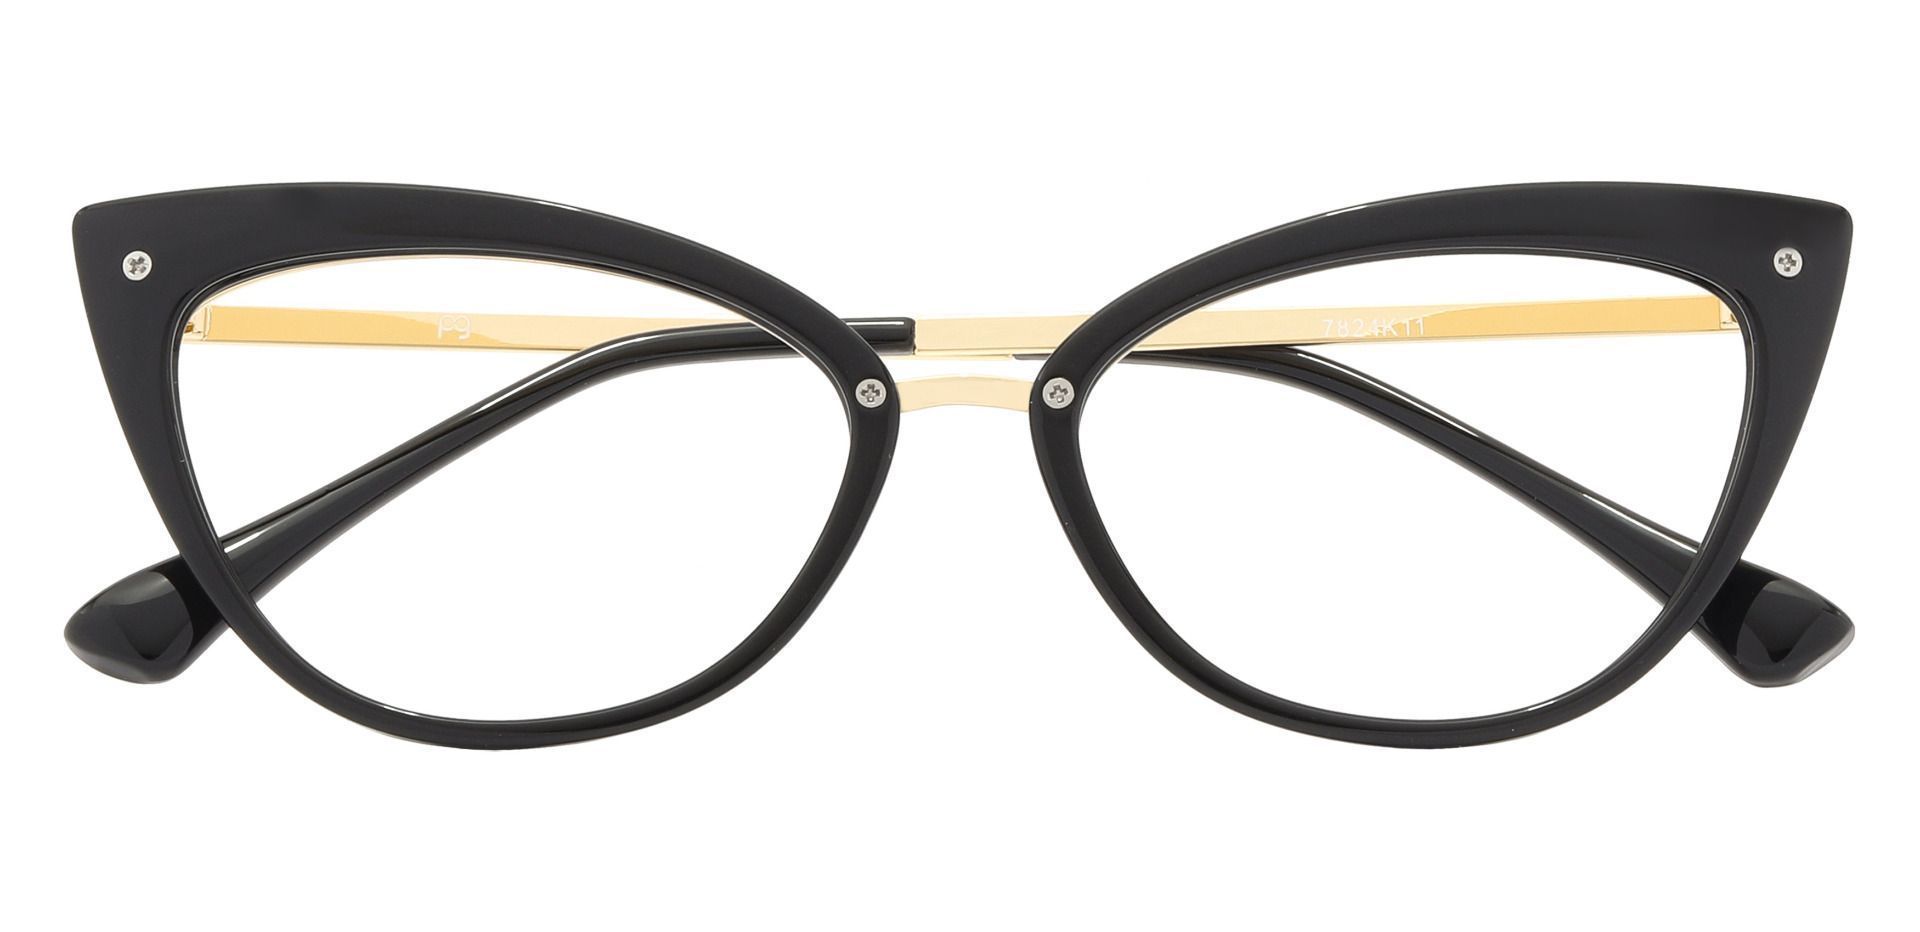 Glenda Cat Eye Prescription Glasses - Black